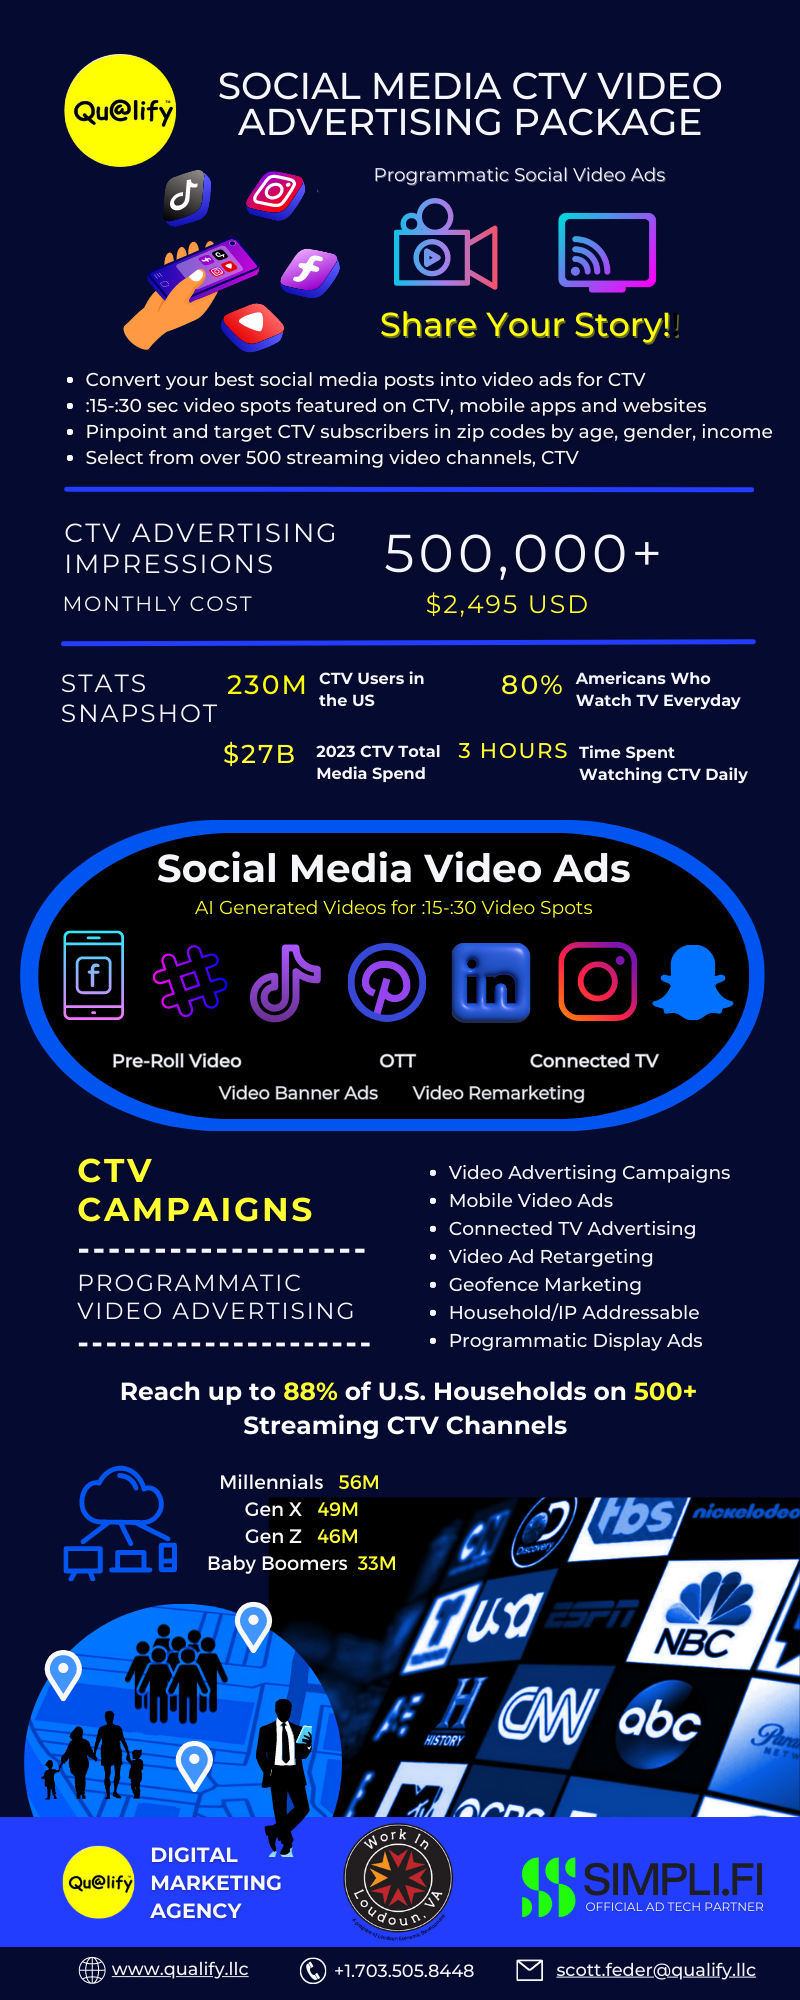 CTV Social Media Video Advertising Package - Qualify LLC